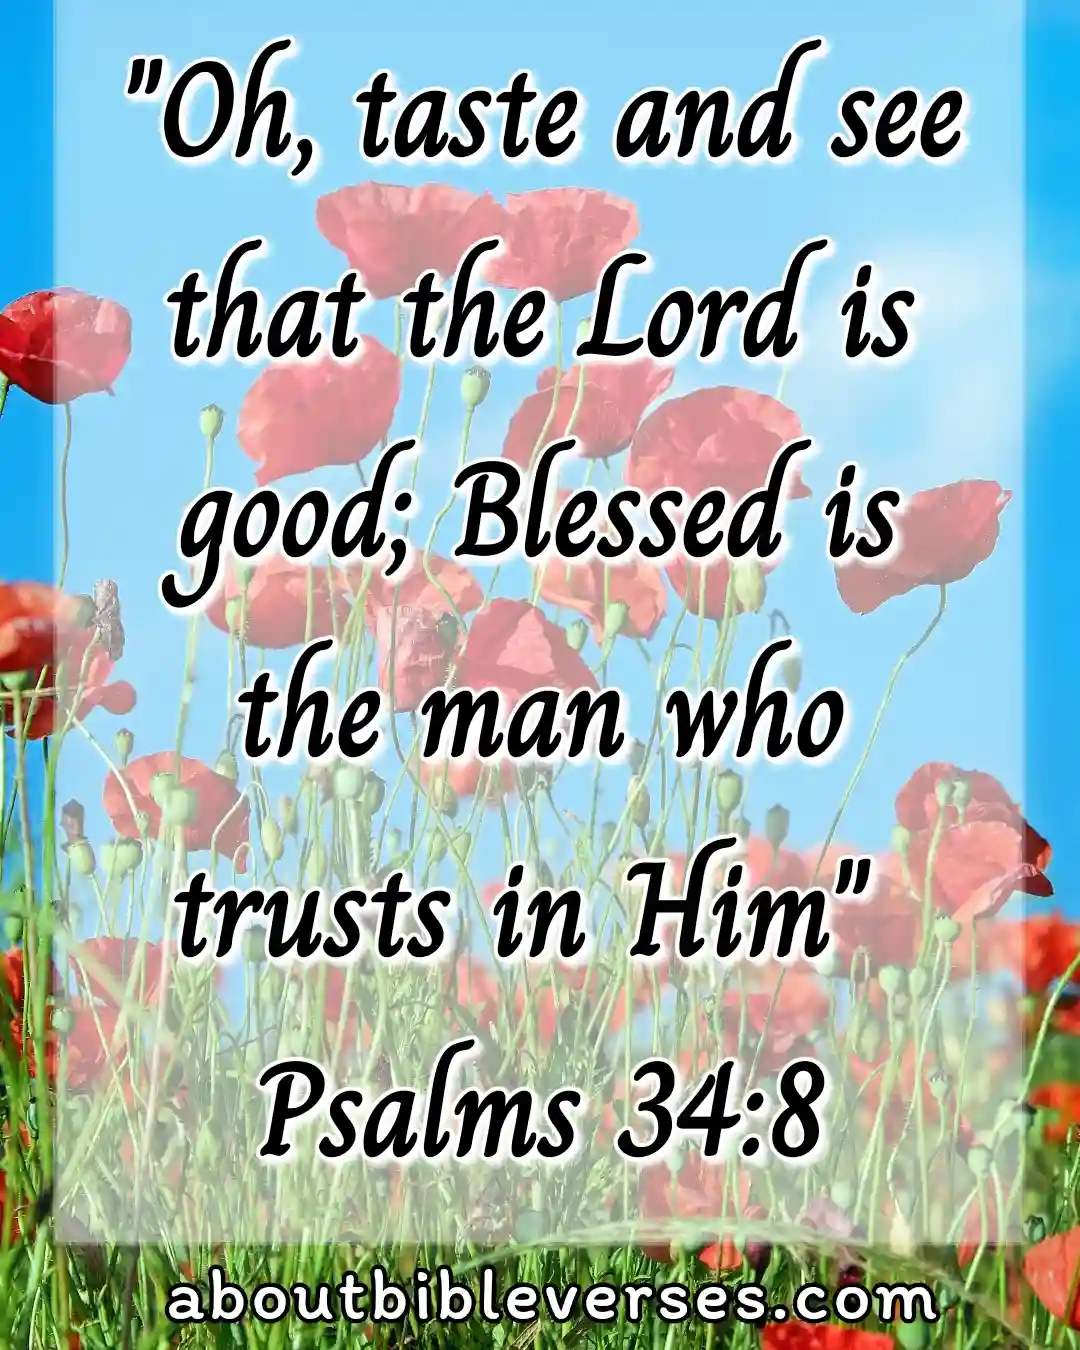 God Blessed Us (Psalm 34:8)